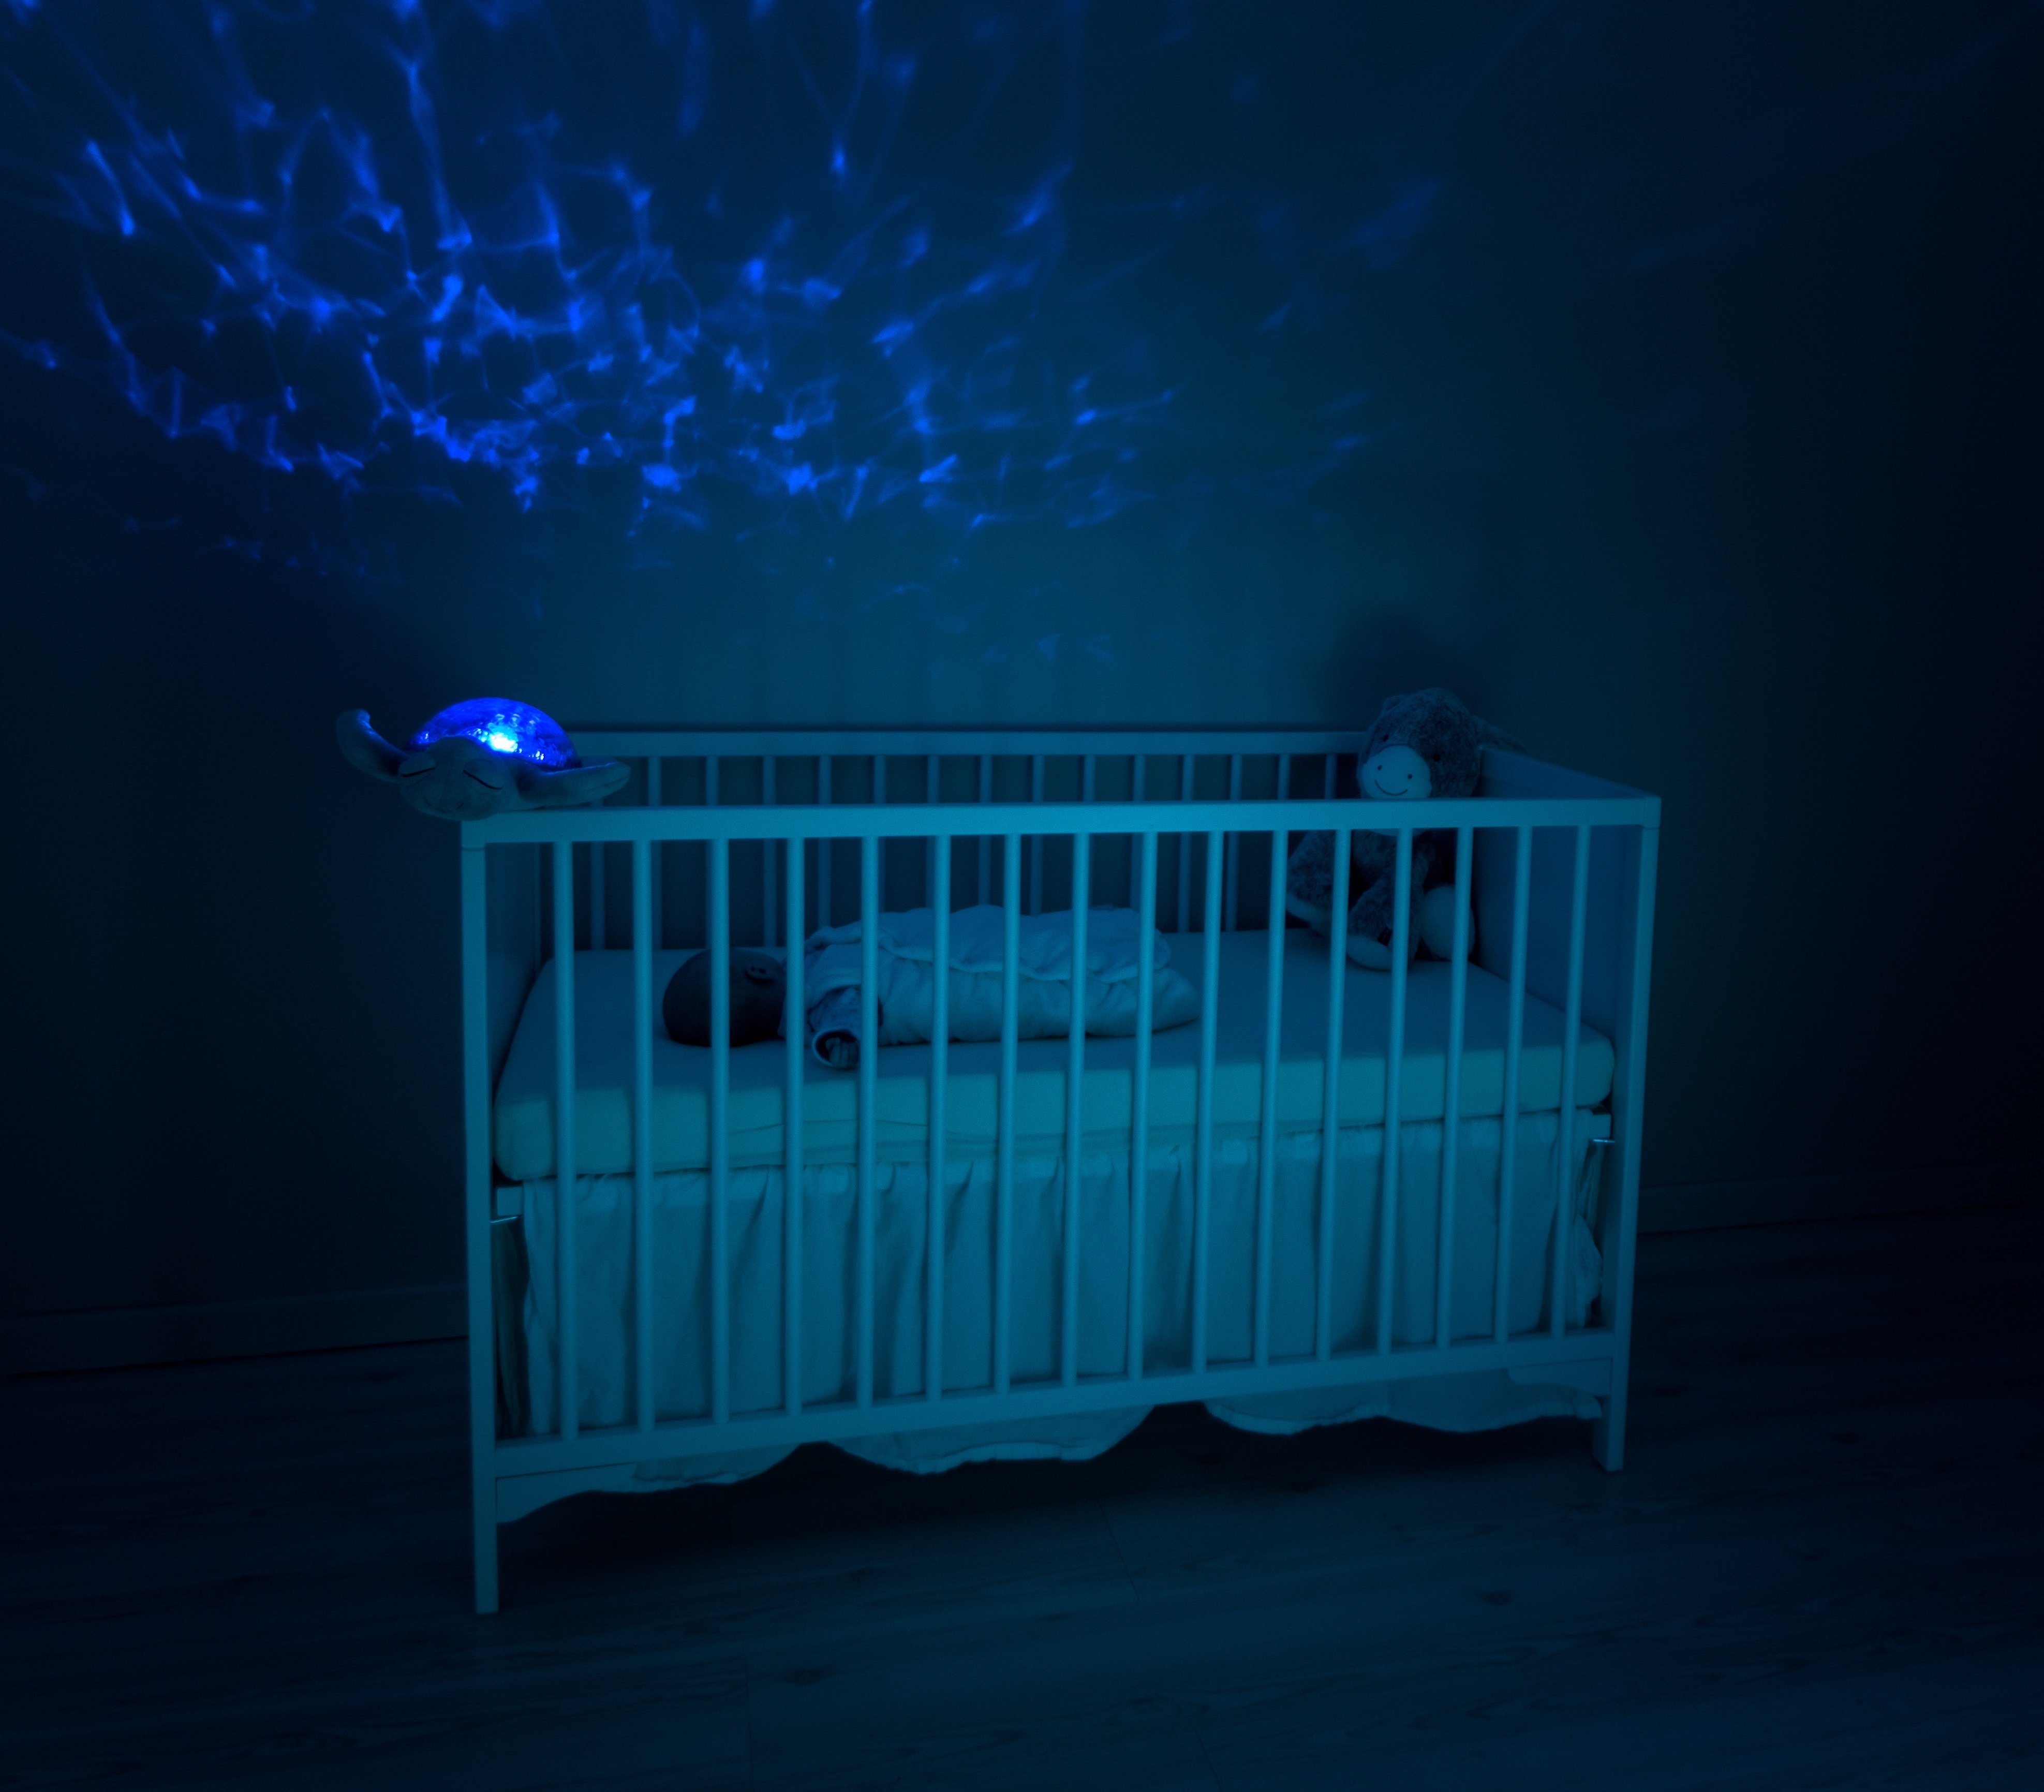 A baby sleeping in a crib. | Source: Unsplash